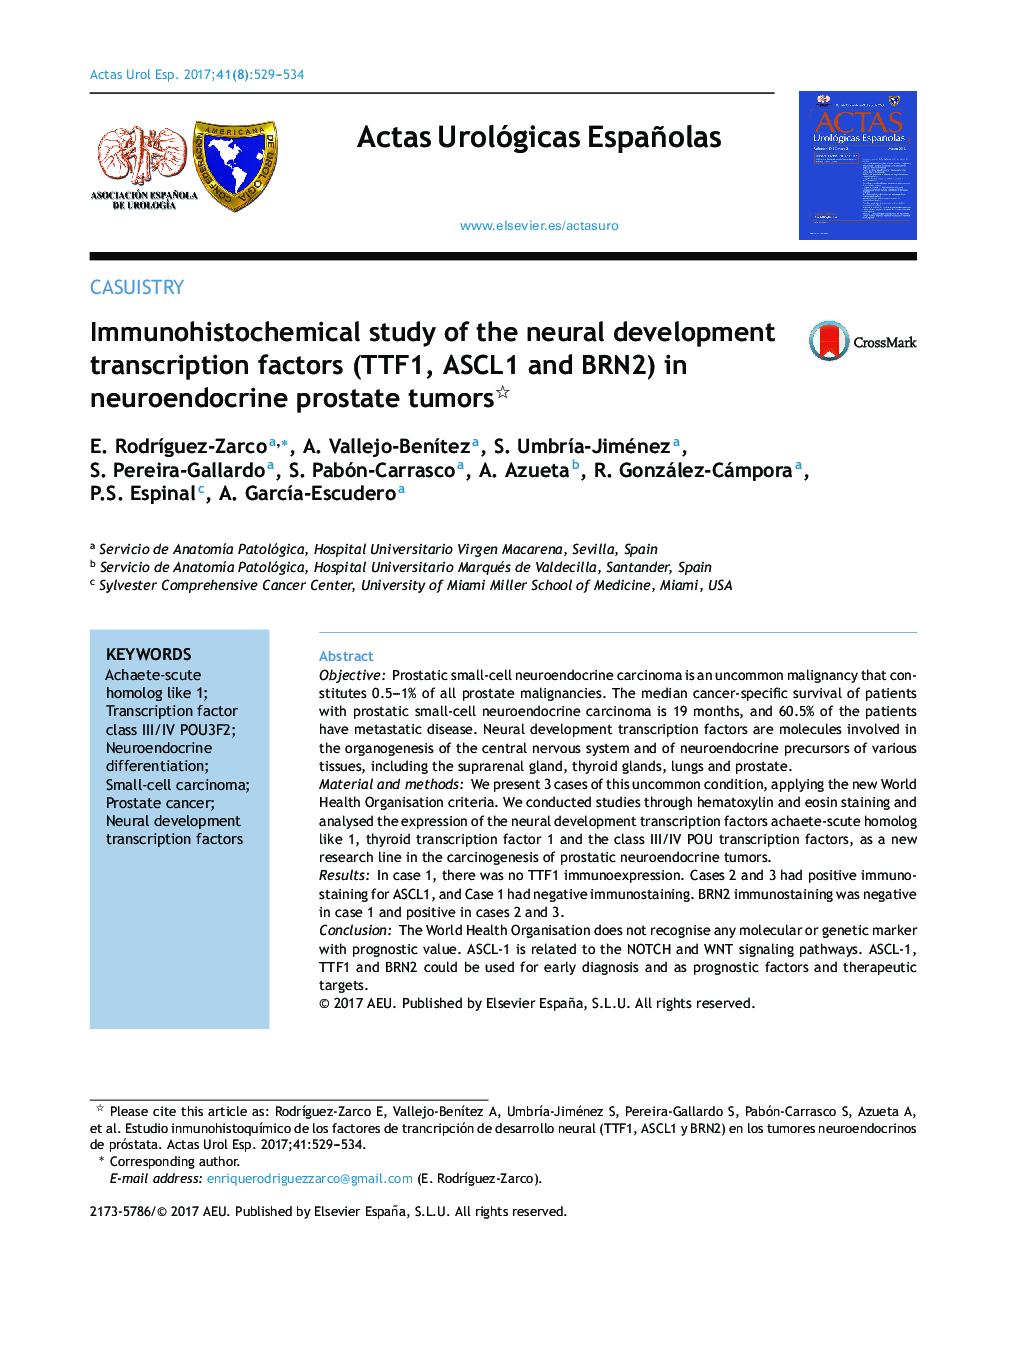 Immunohistochemical study of the neural development transcription factors (TTF1, ASCL1 and BRN2) in neuroendocrine prostate tumors